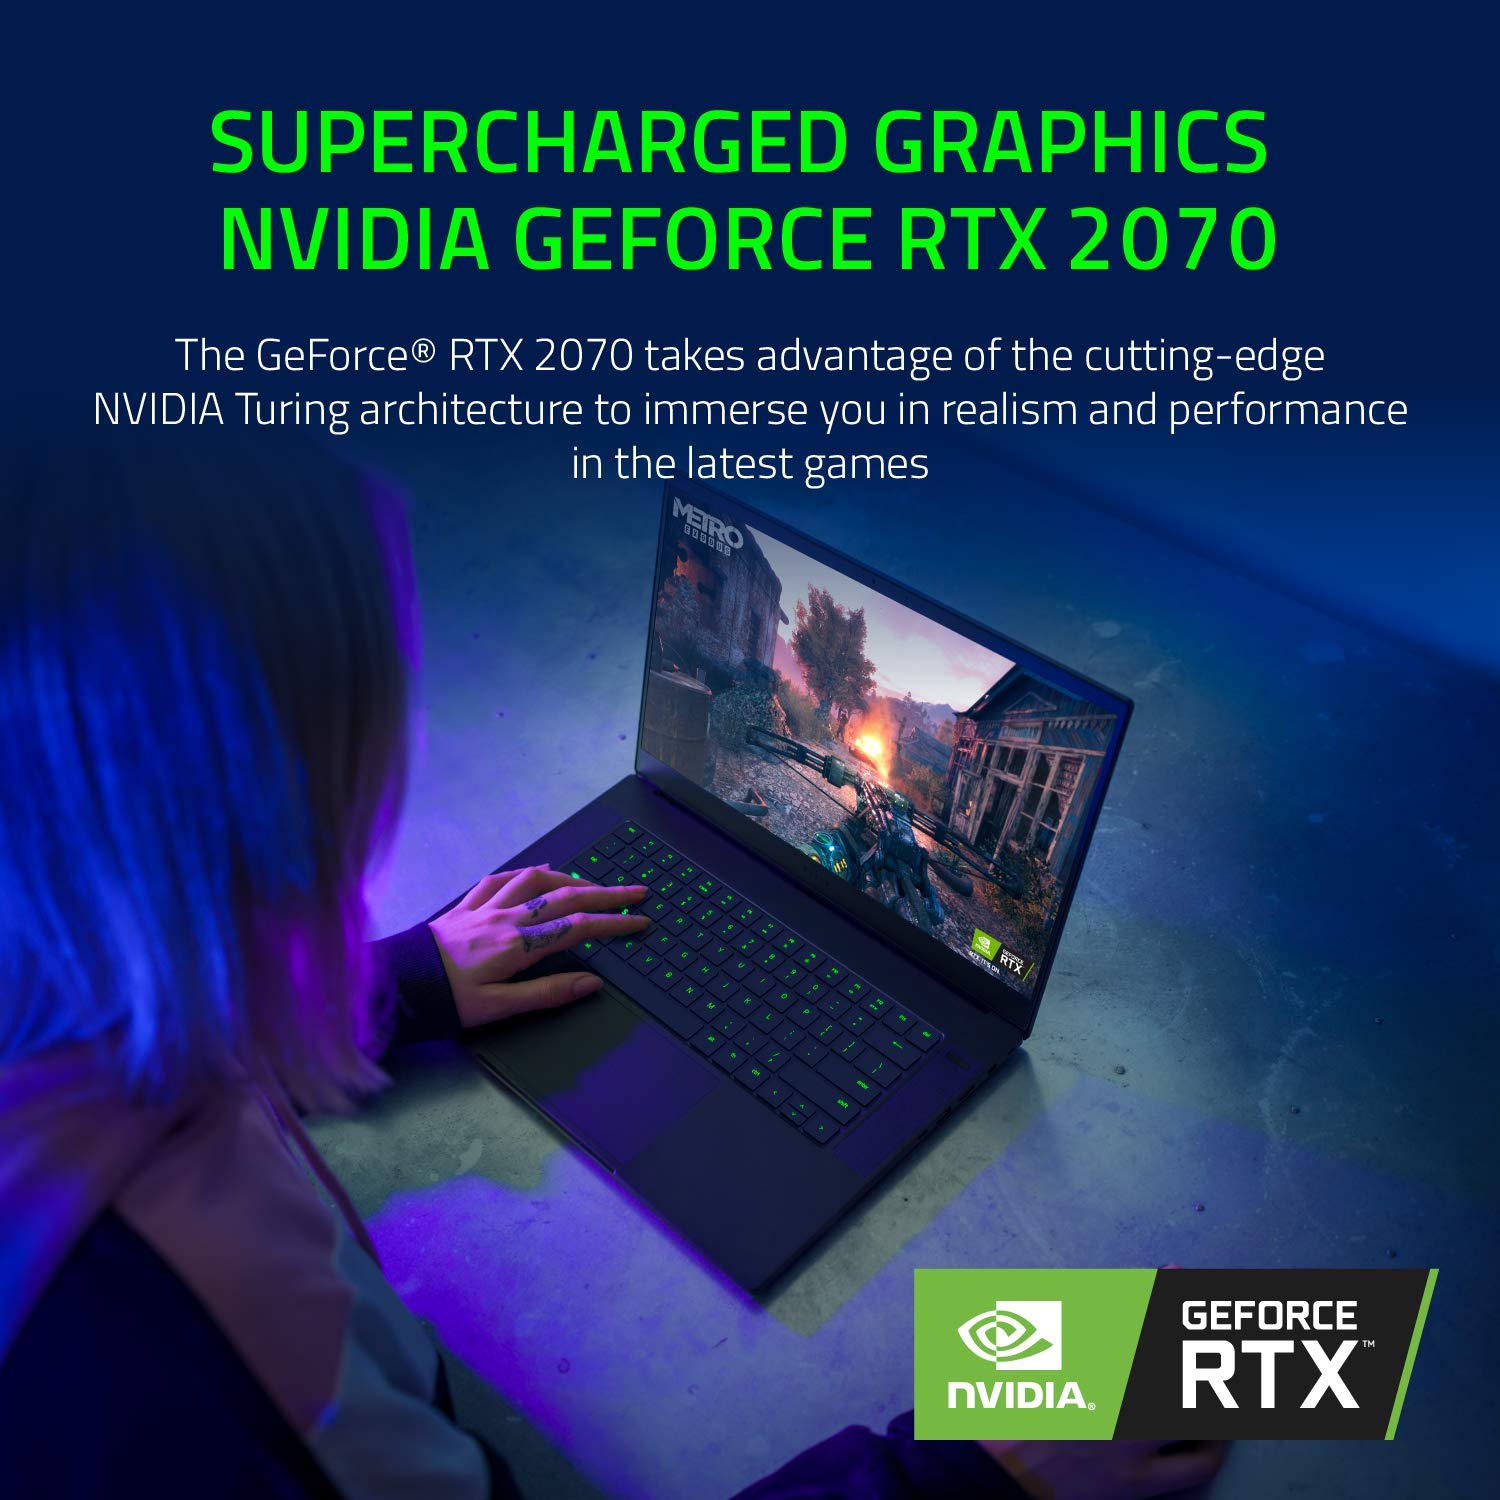 Razer Blade 15 Base Gaming Laptop 2020: Intel Core i7-10750H 6 Core, NVIDIA GeForce RTX 2070 Max-Q, 15.6